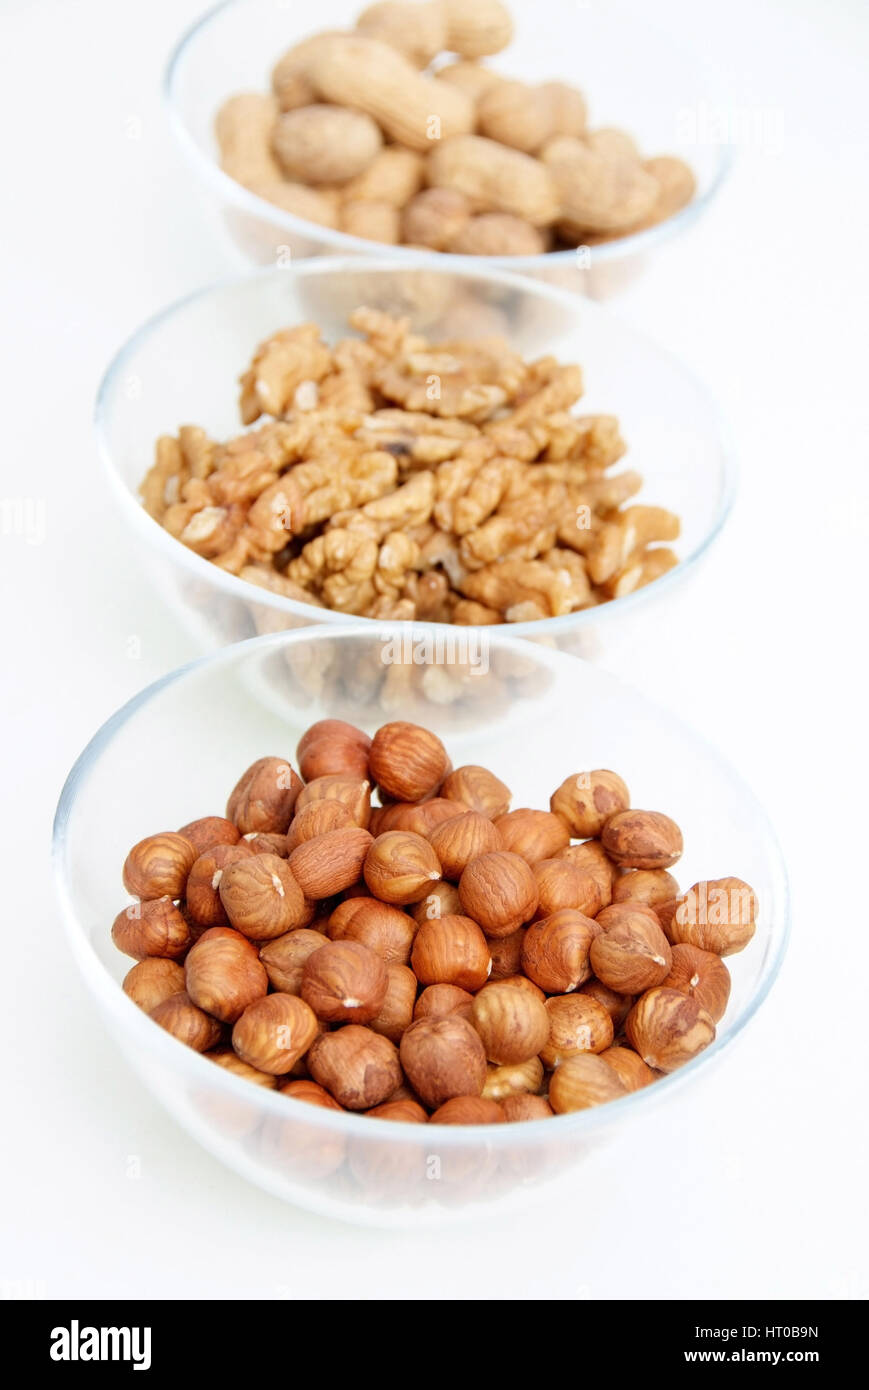 Haselnuesse, Walnuesse und Ernuesse - nuts Stock Photo